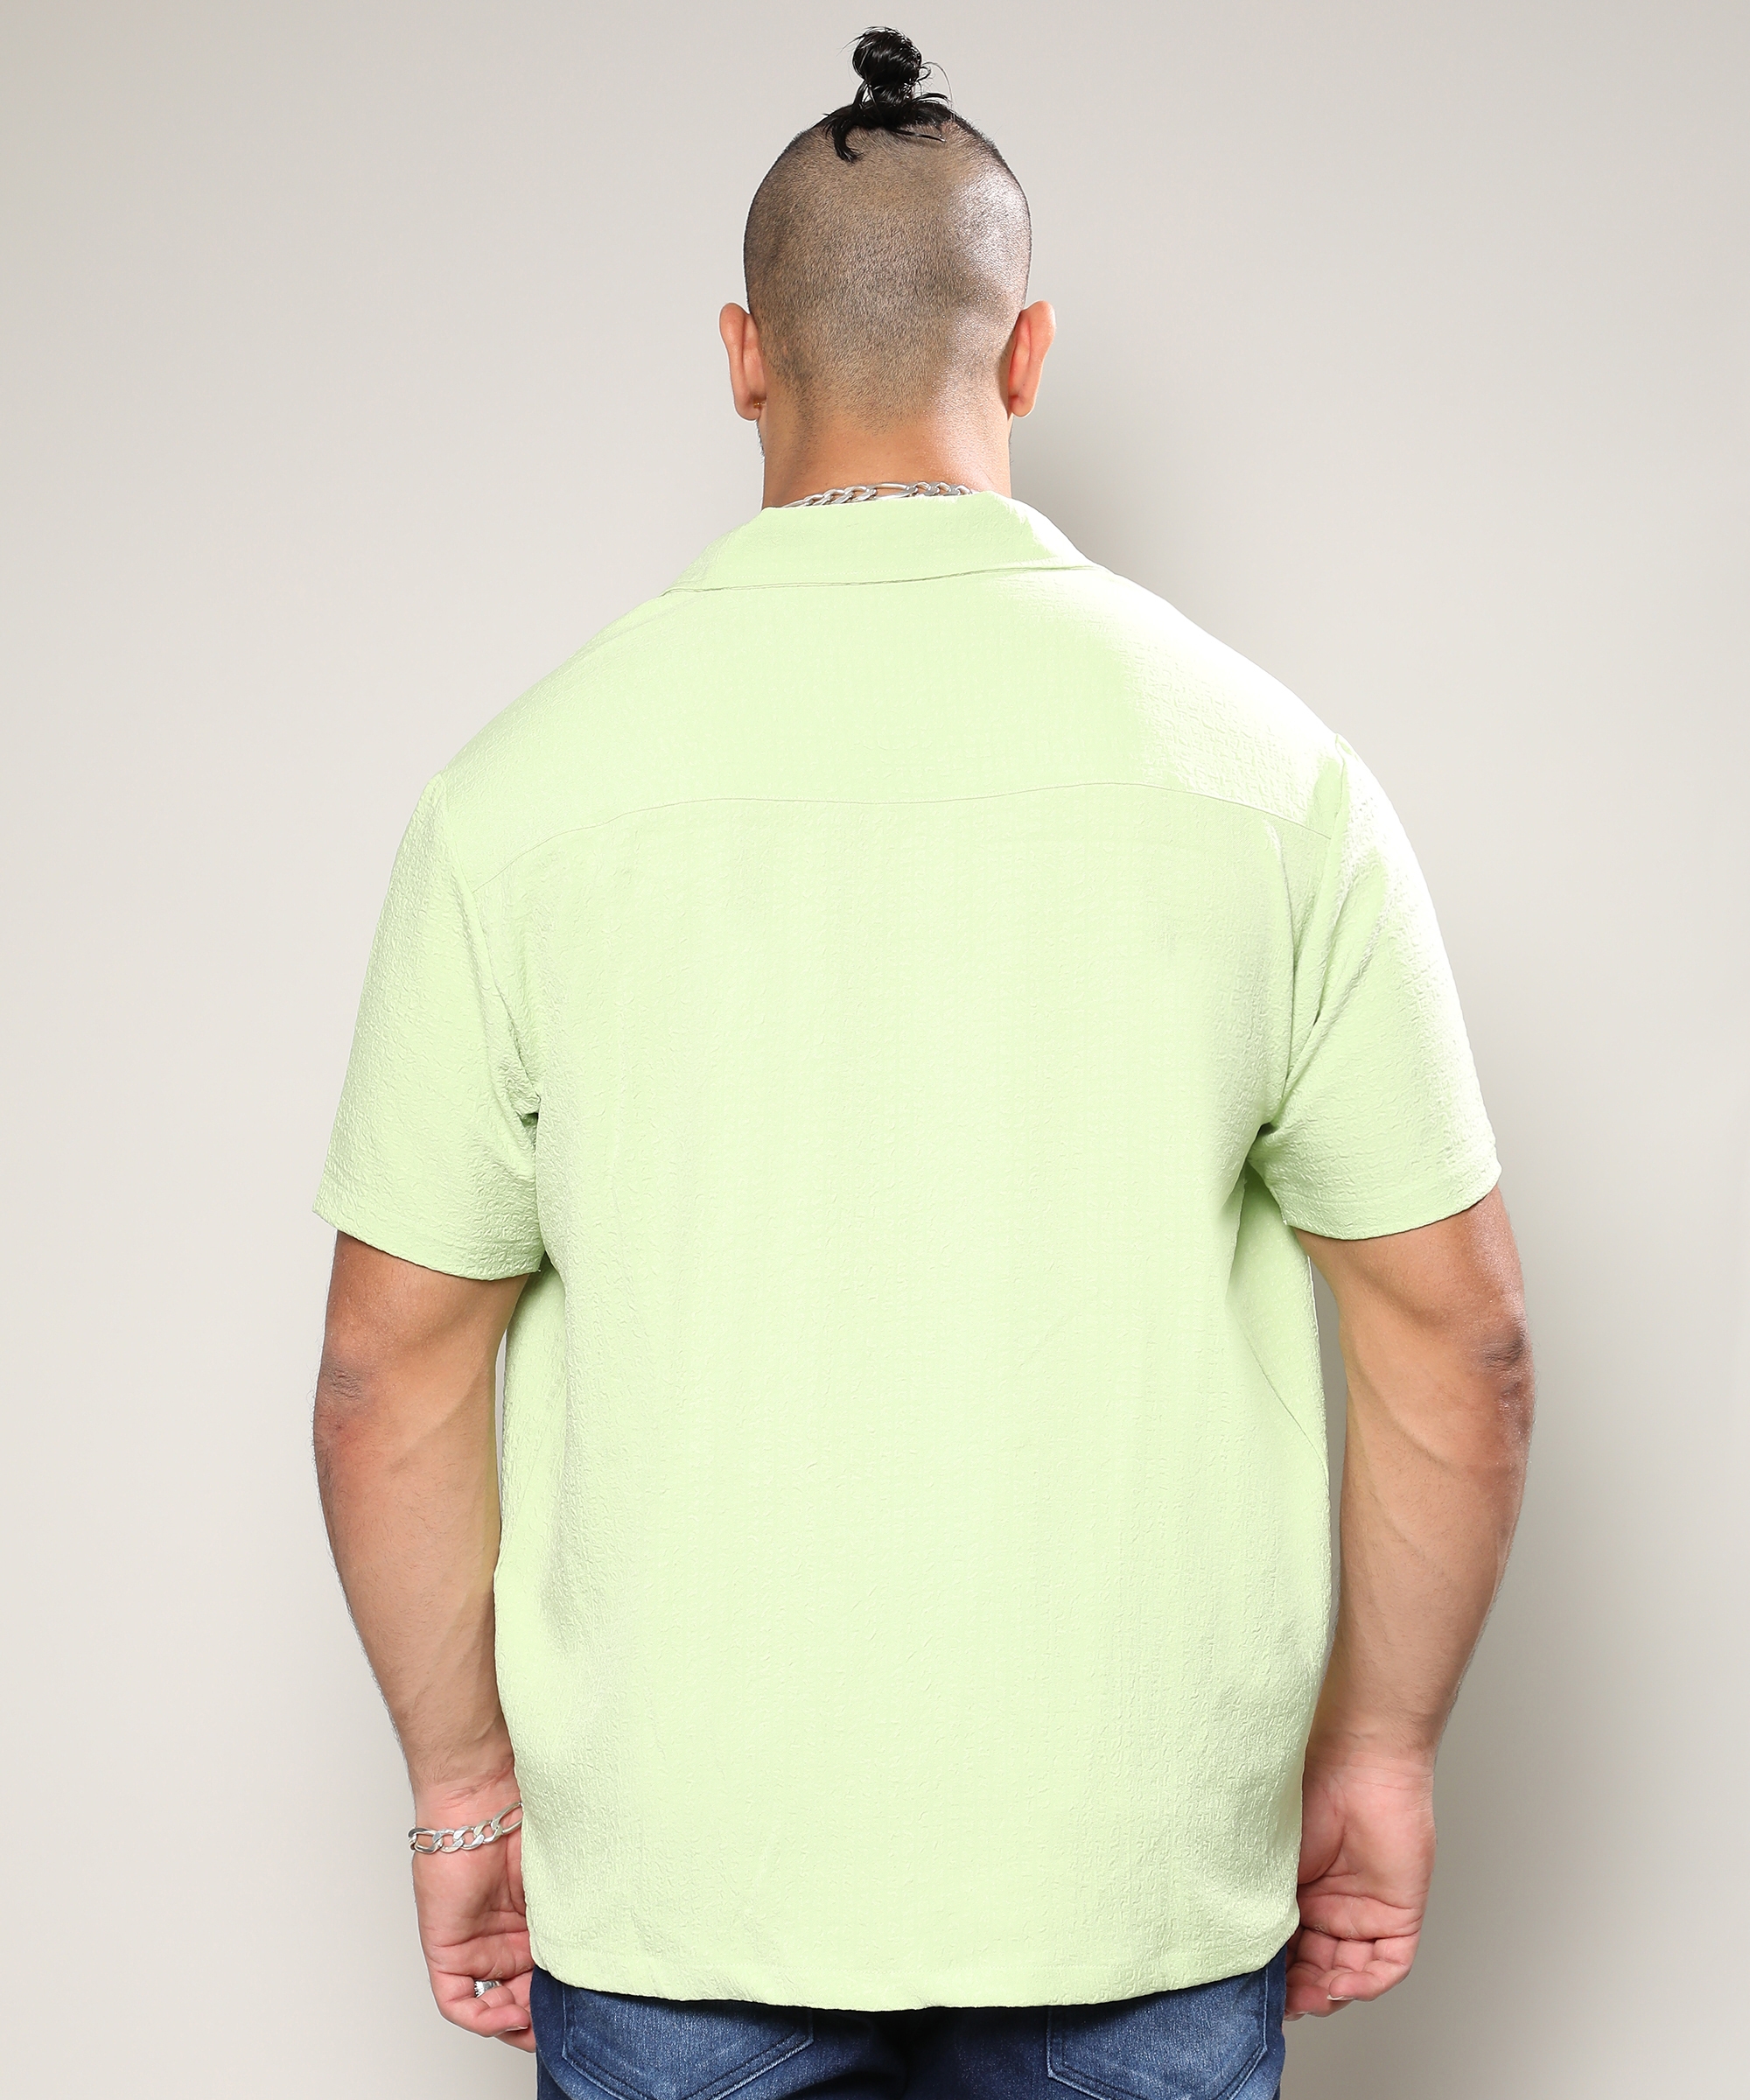 Instafab Plus | Men's Lime Green Creased Shirt